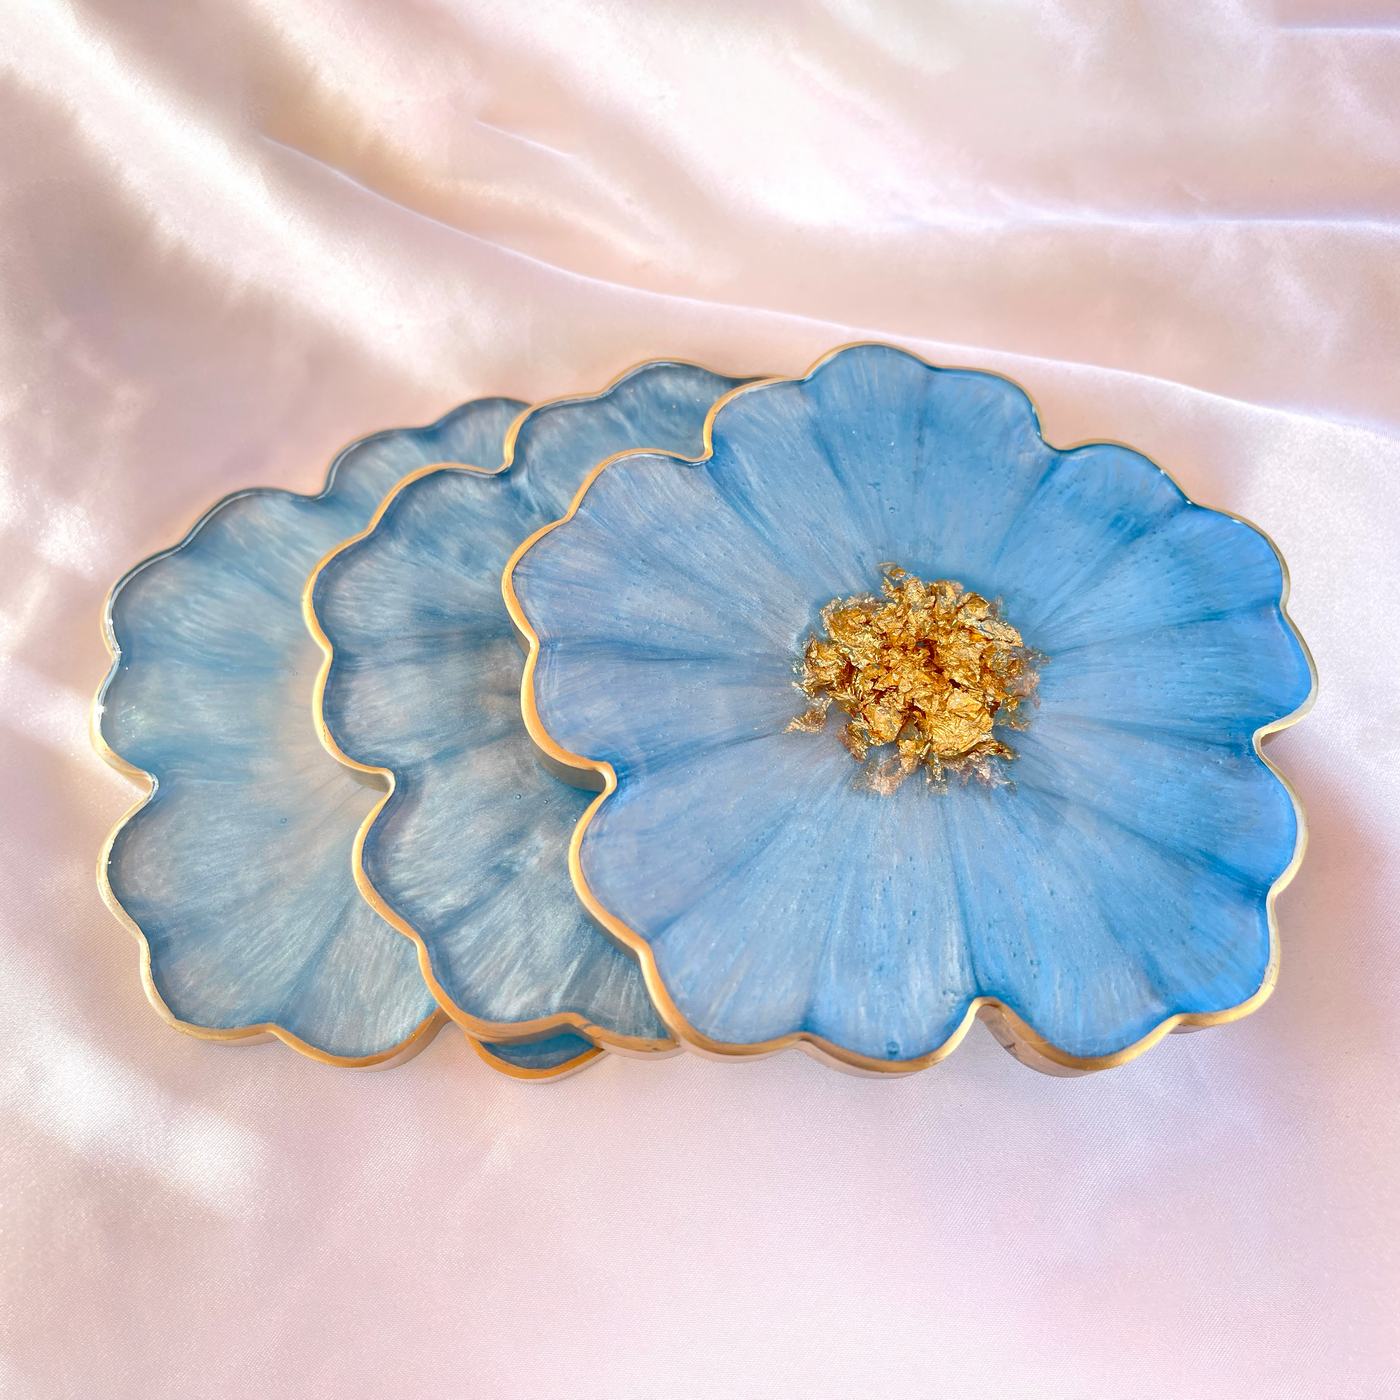 Handmade Baby Sky Blue and Gold Resin Flower Shaped Coasters Set - Jasmin Renee Art - Three Coasters Gold Rim Edges